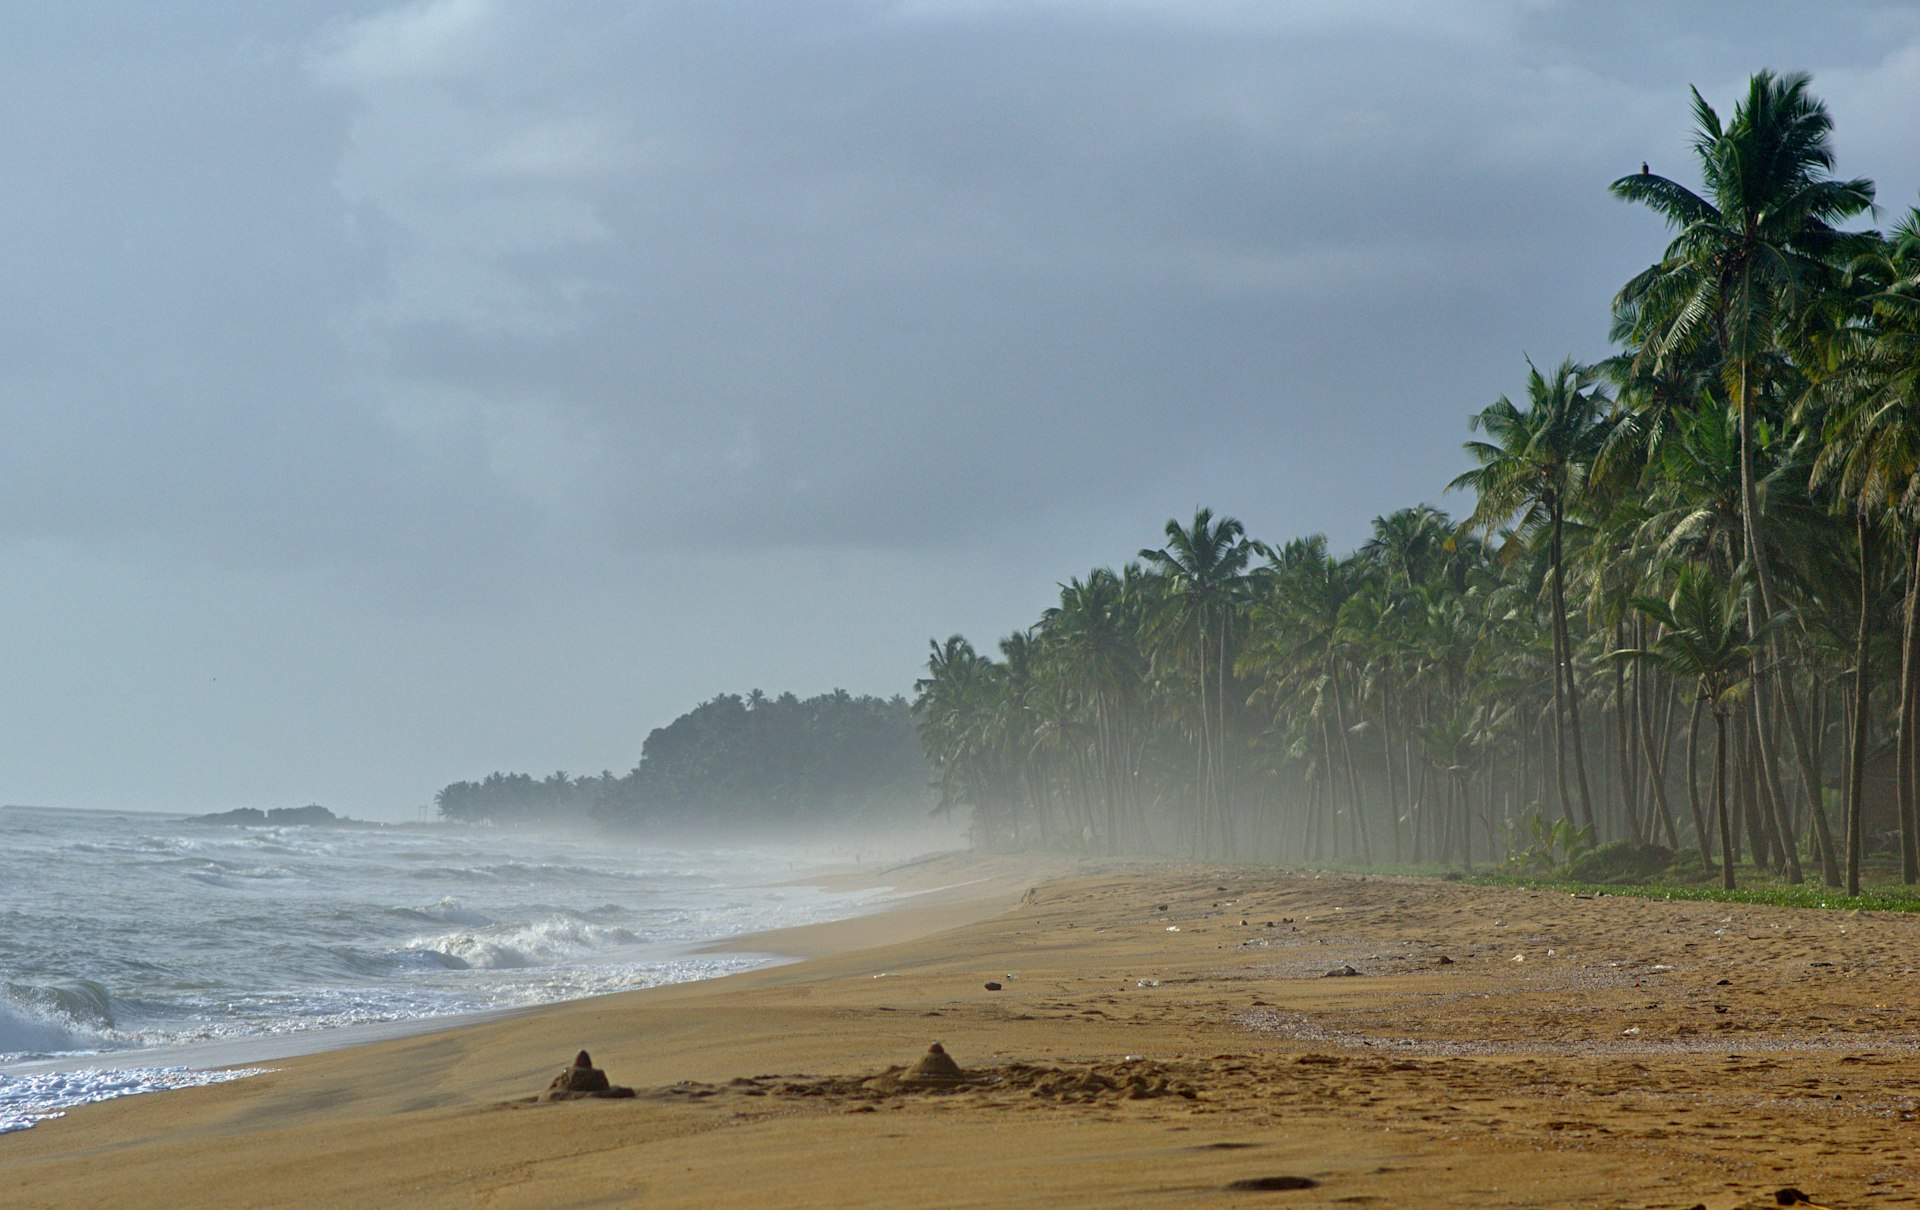 Wild beaches without a sunbather in sight, northern Kerala © Raghavan Prabhu / CC by 2.0